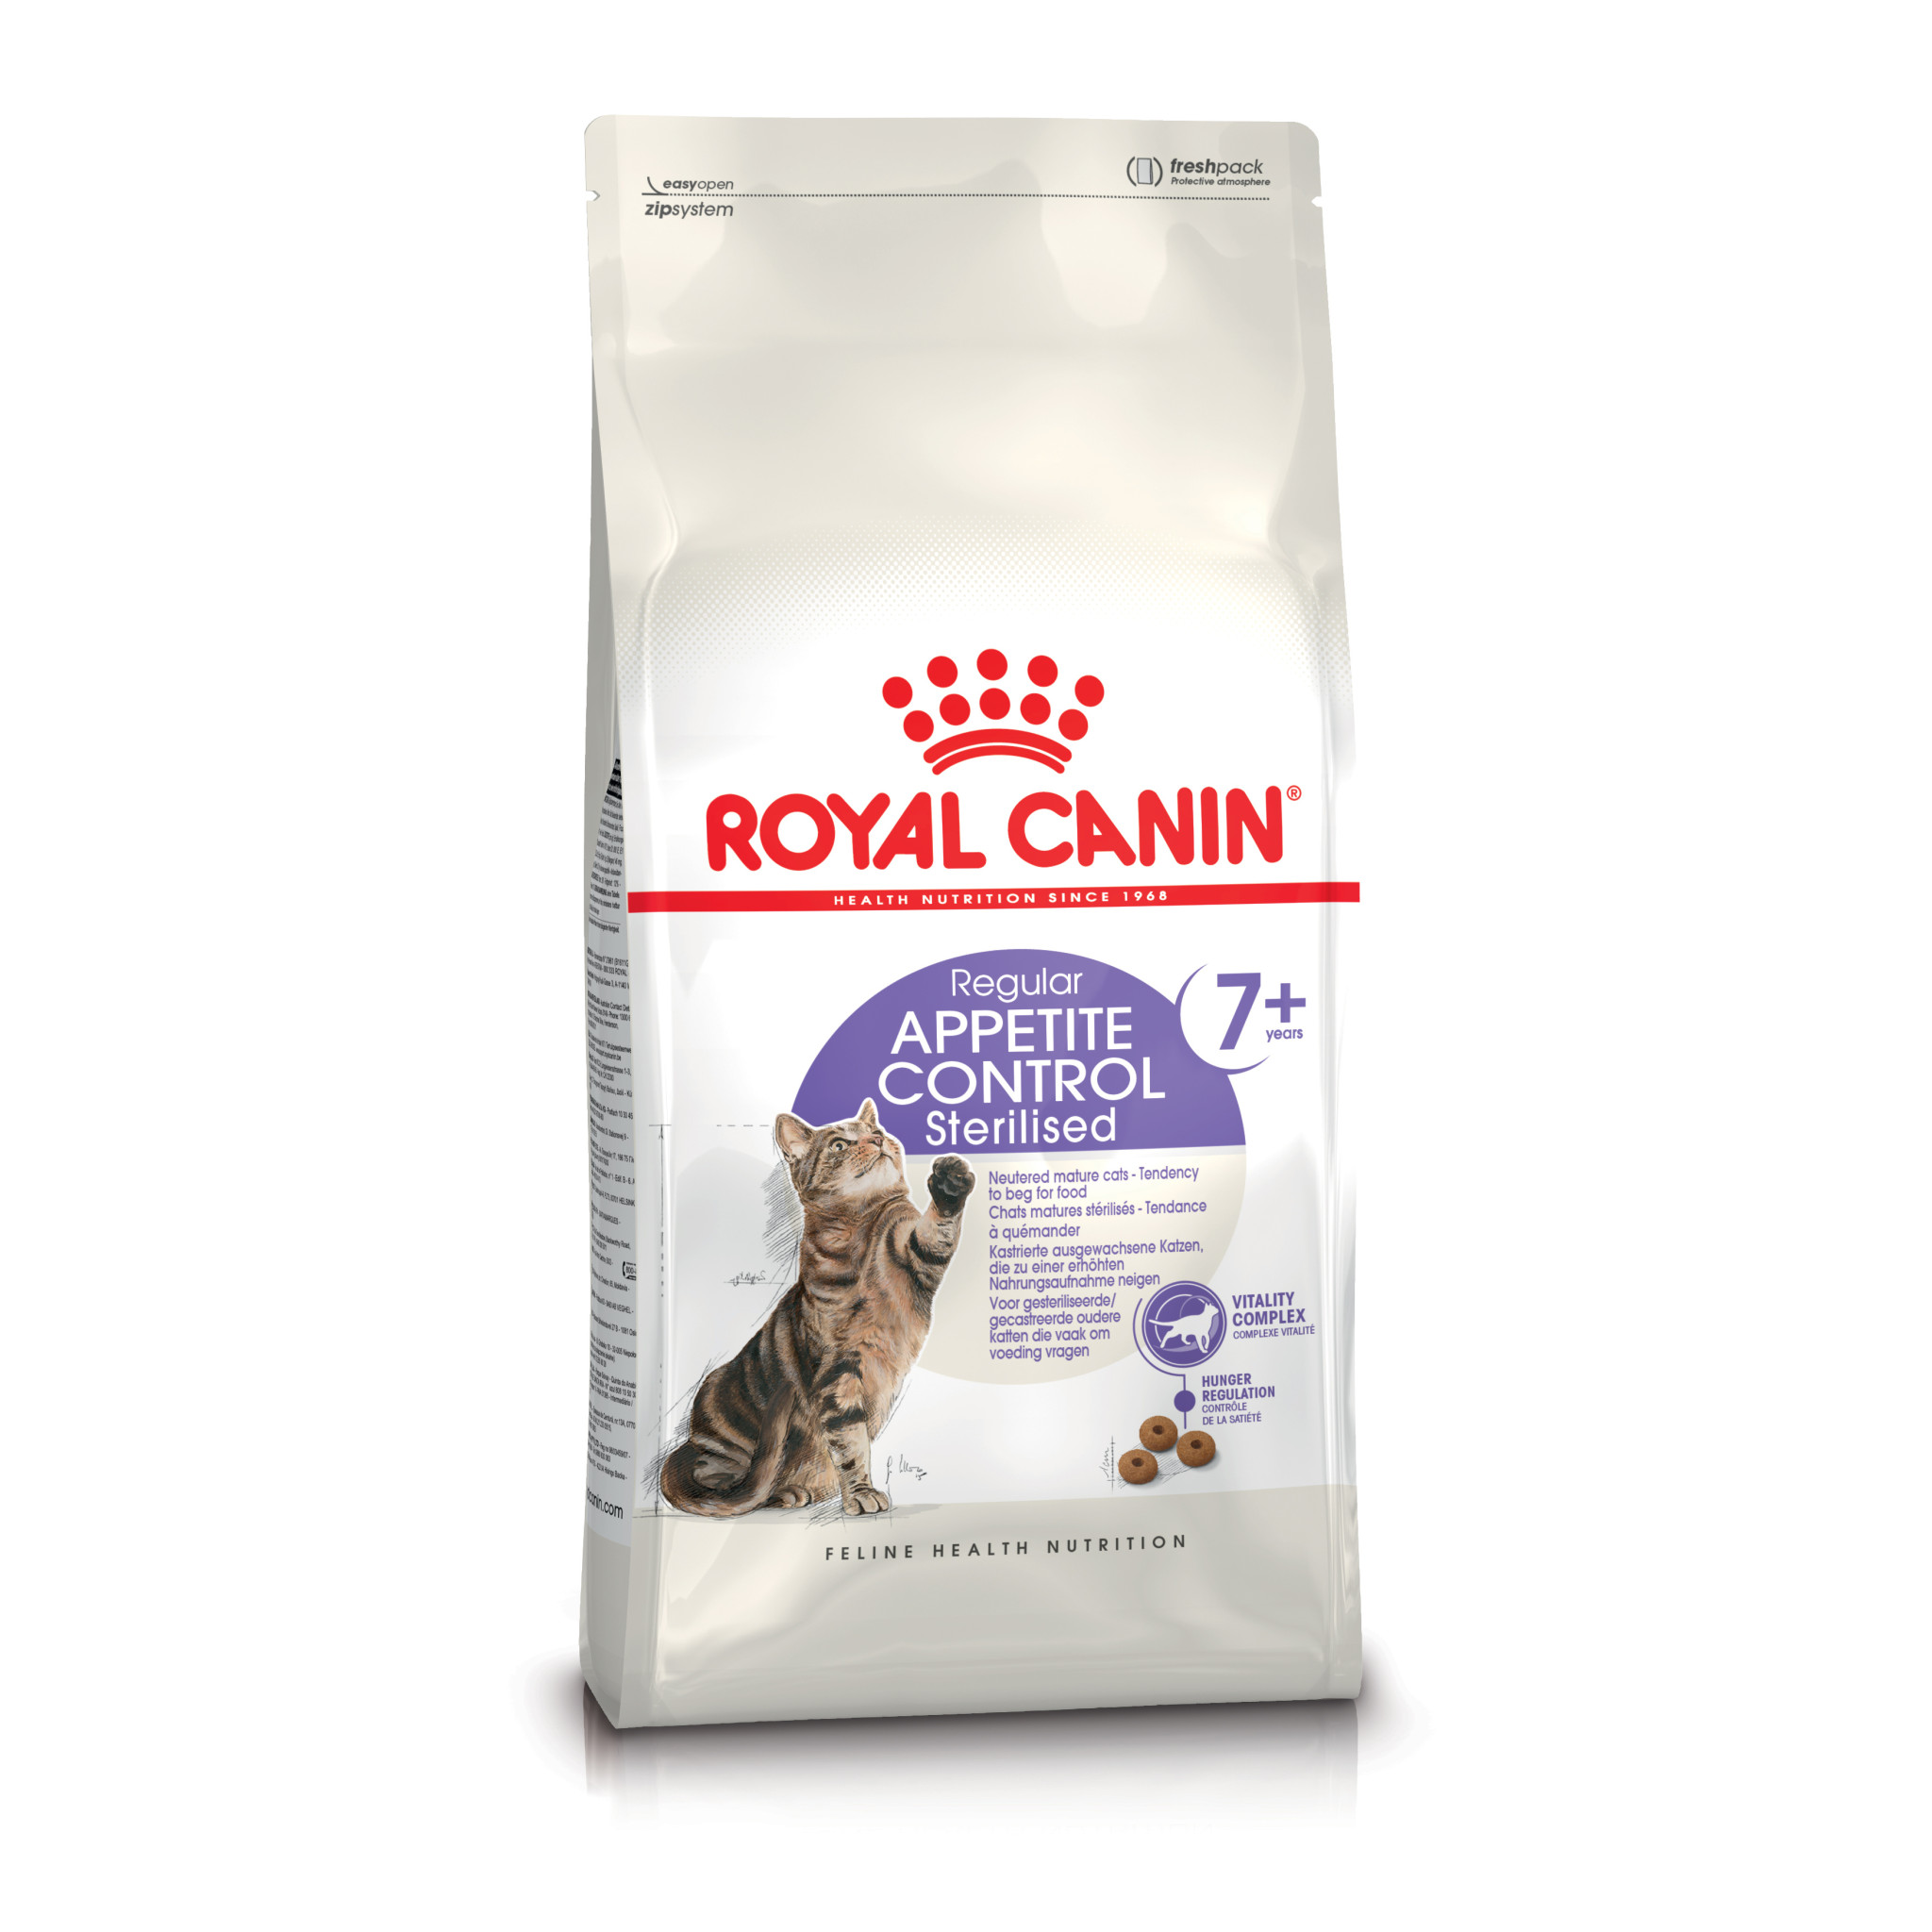 Royal canin chat stérilisé, royal canin stérilised